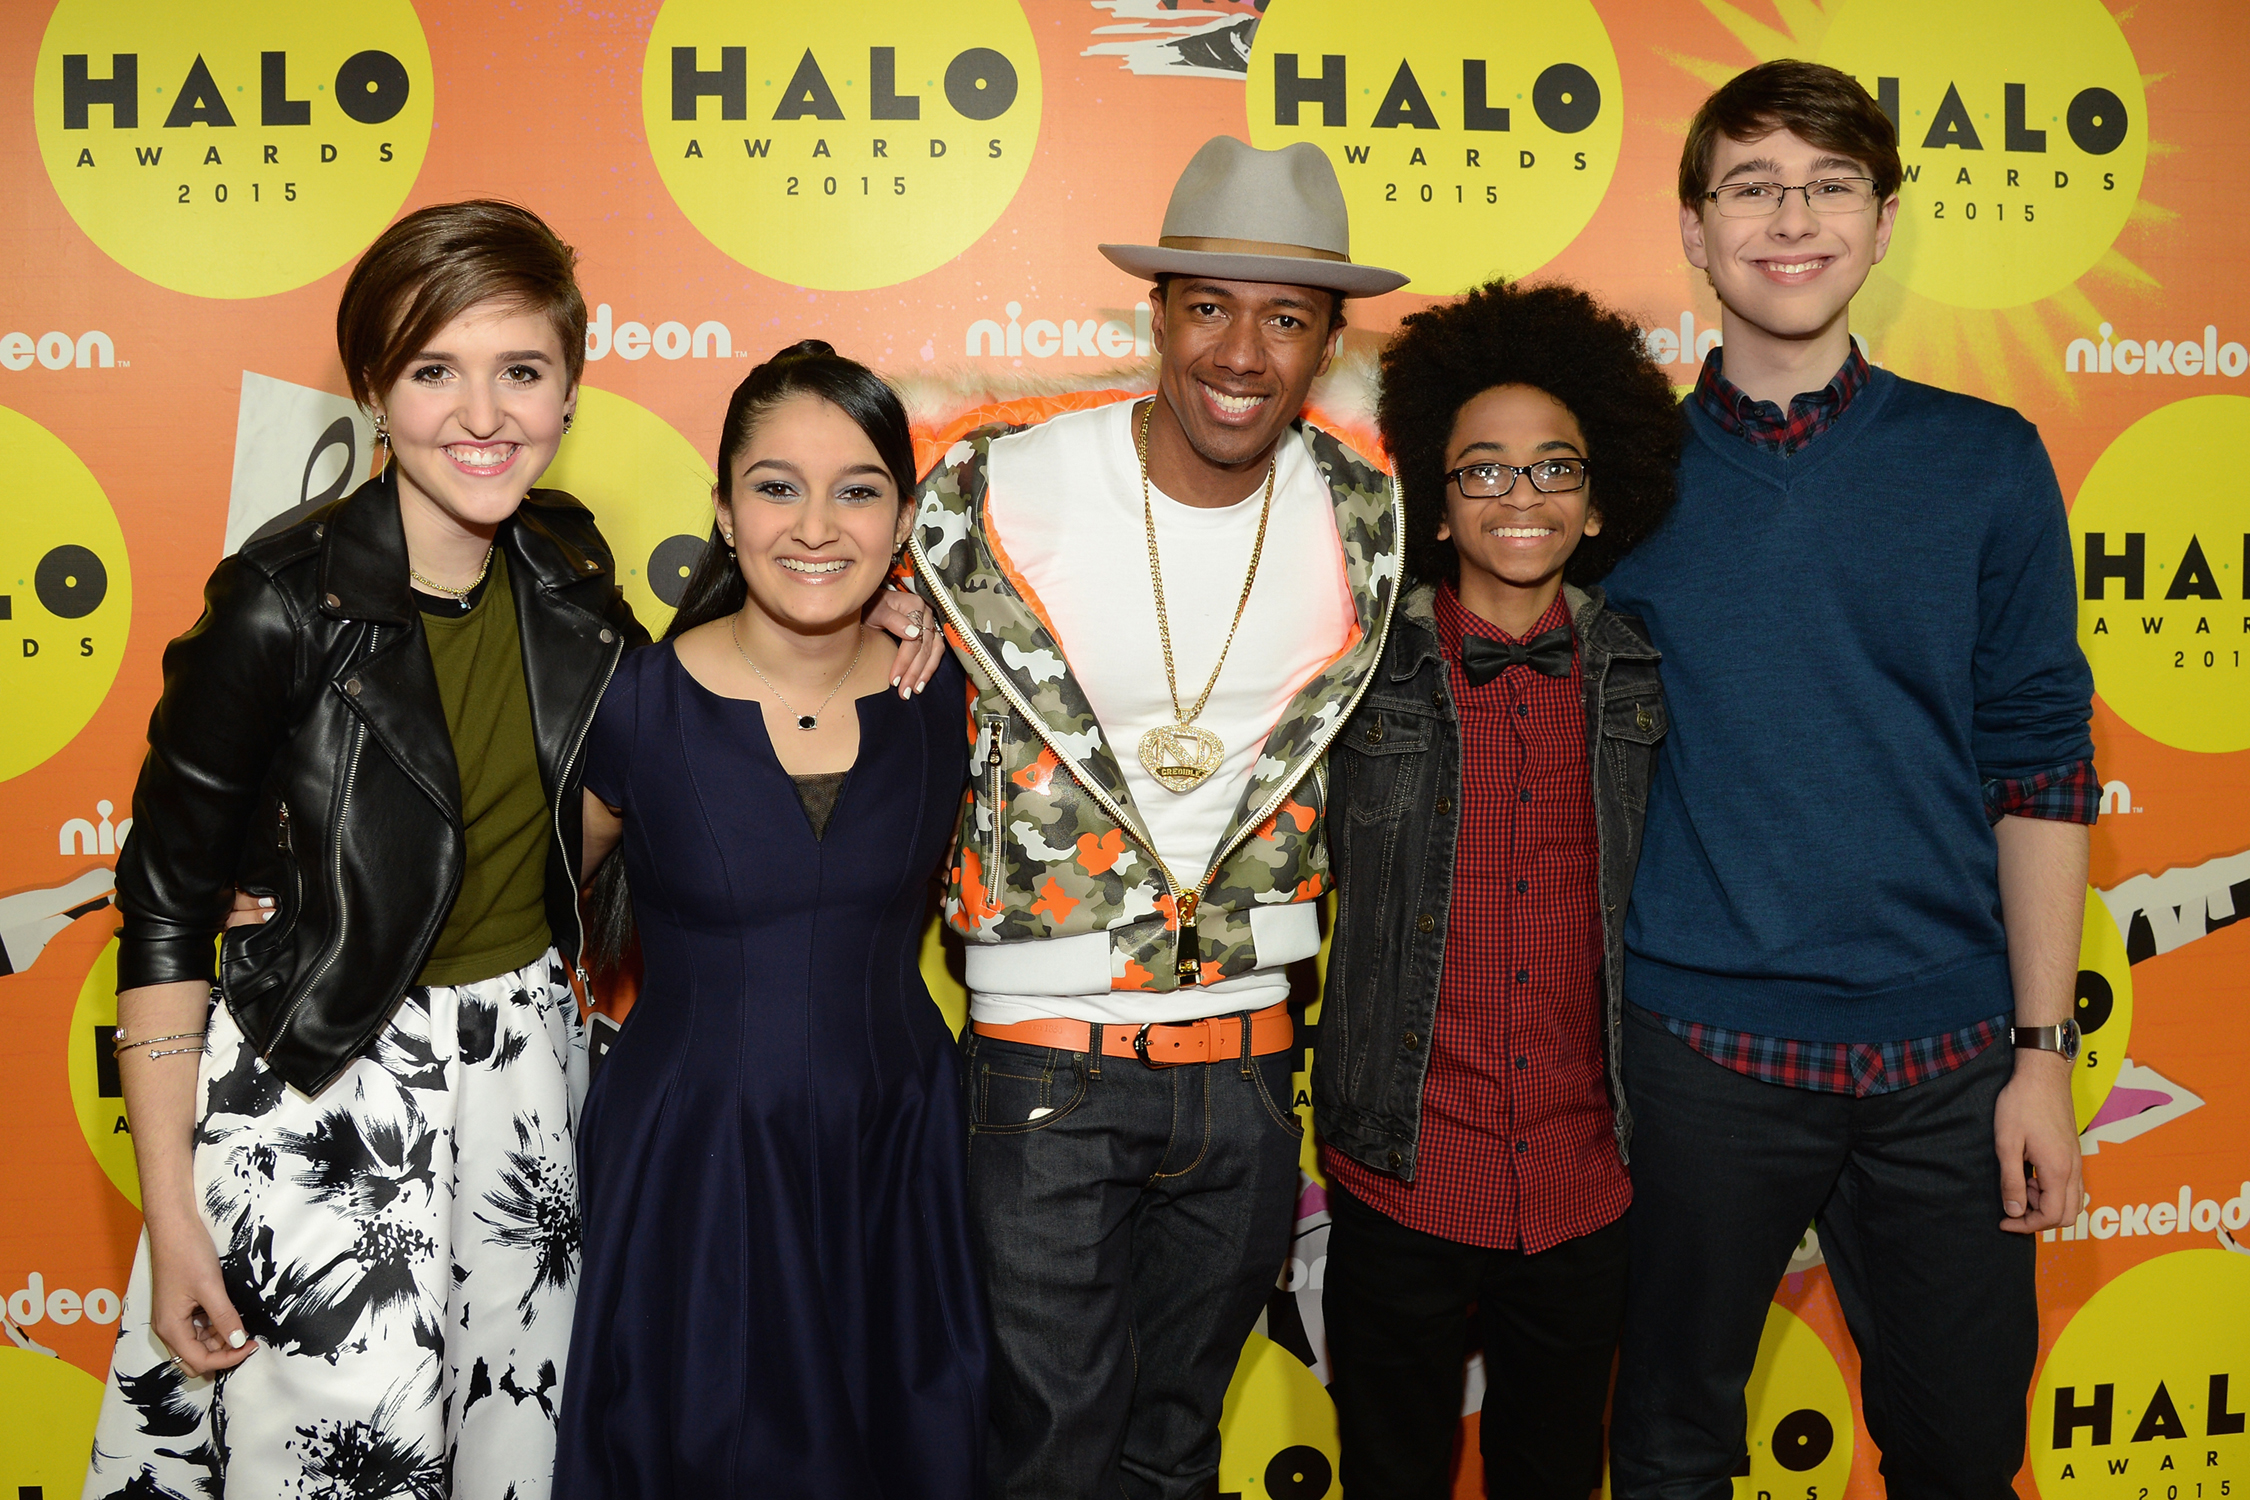 Nickelodeon's HALO Awards 2015